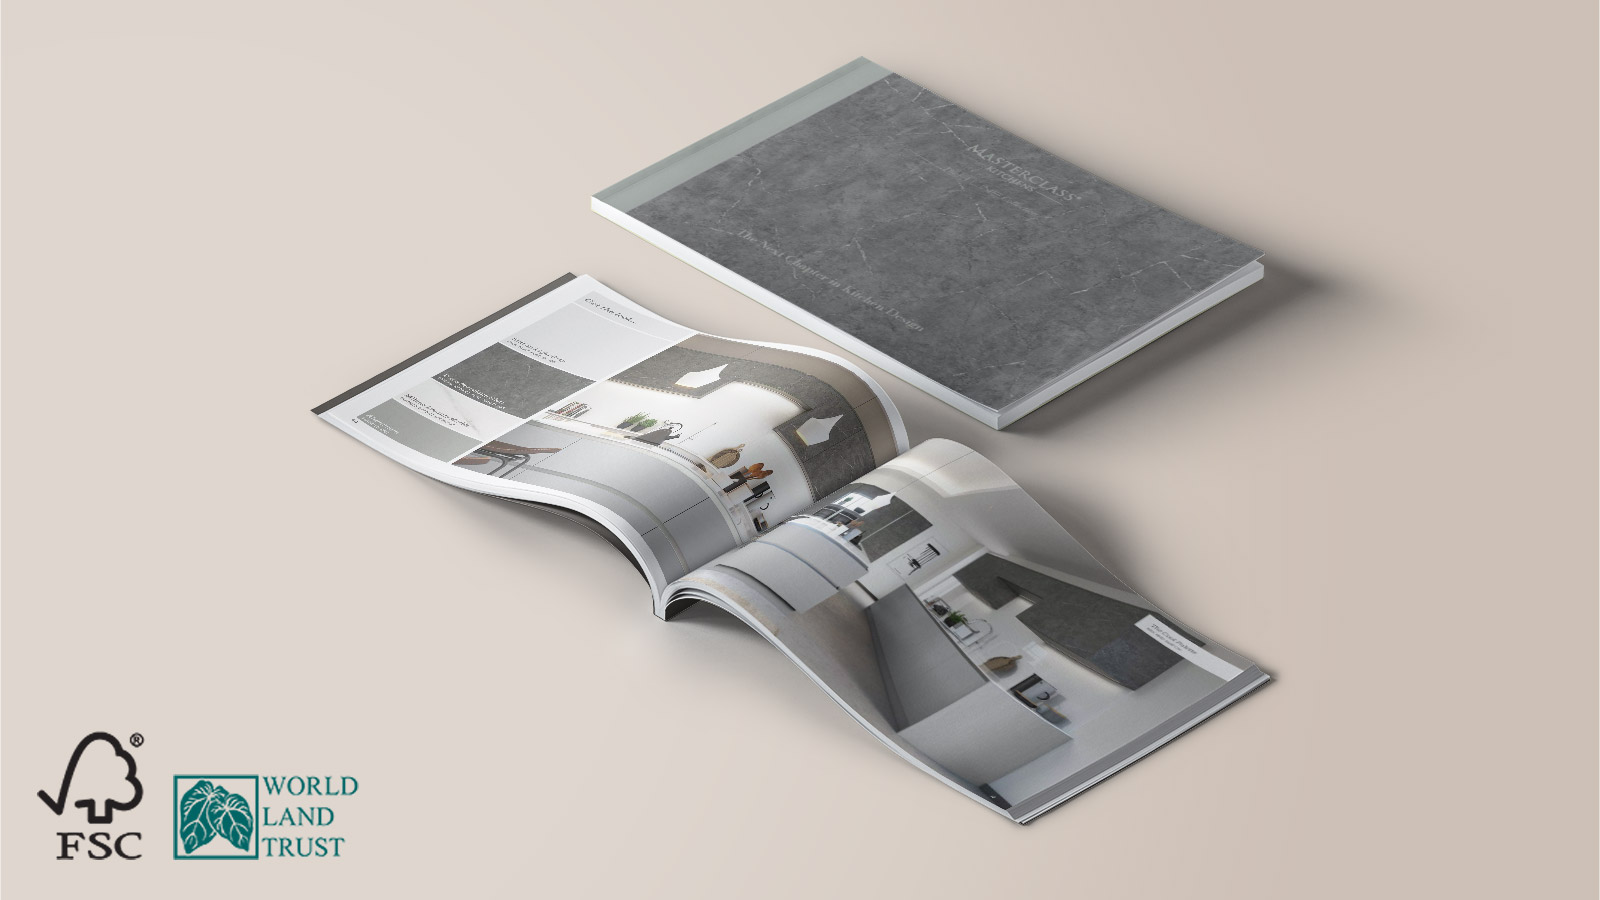 Sigma 3 Kitchens print catalogues